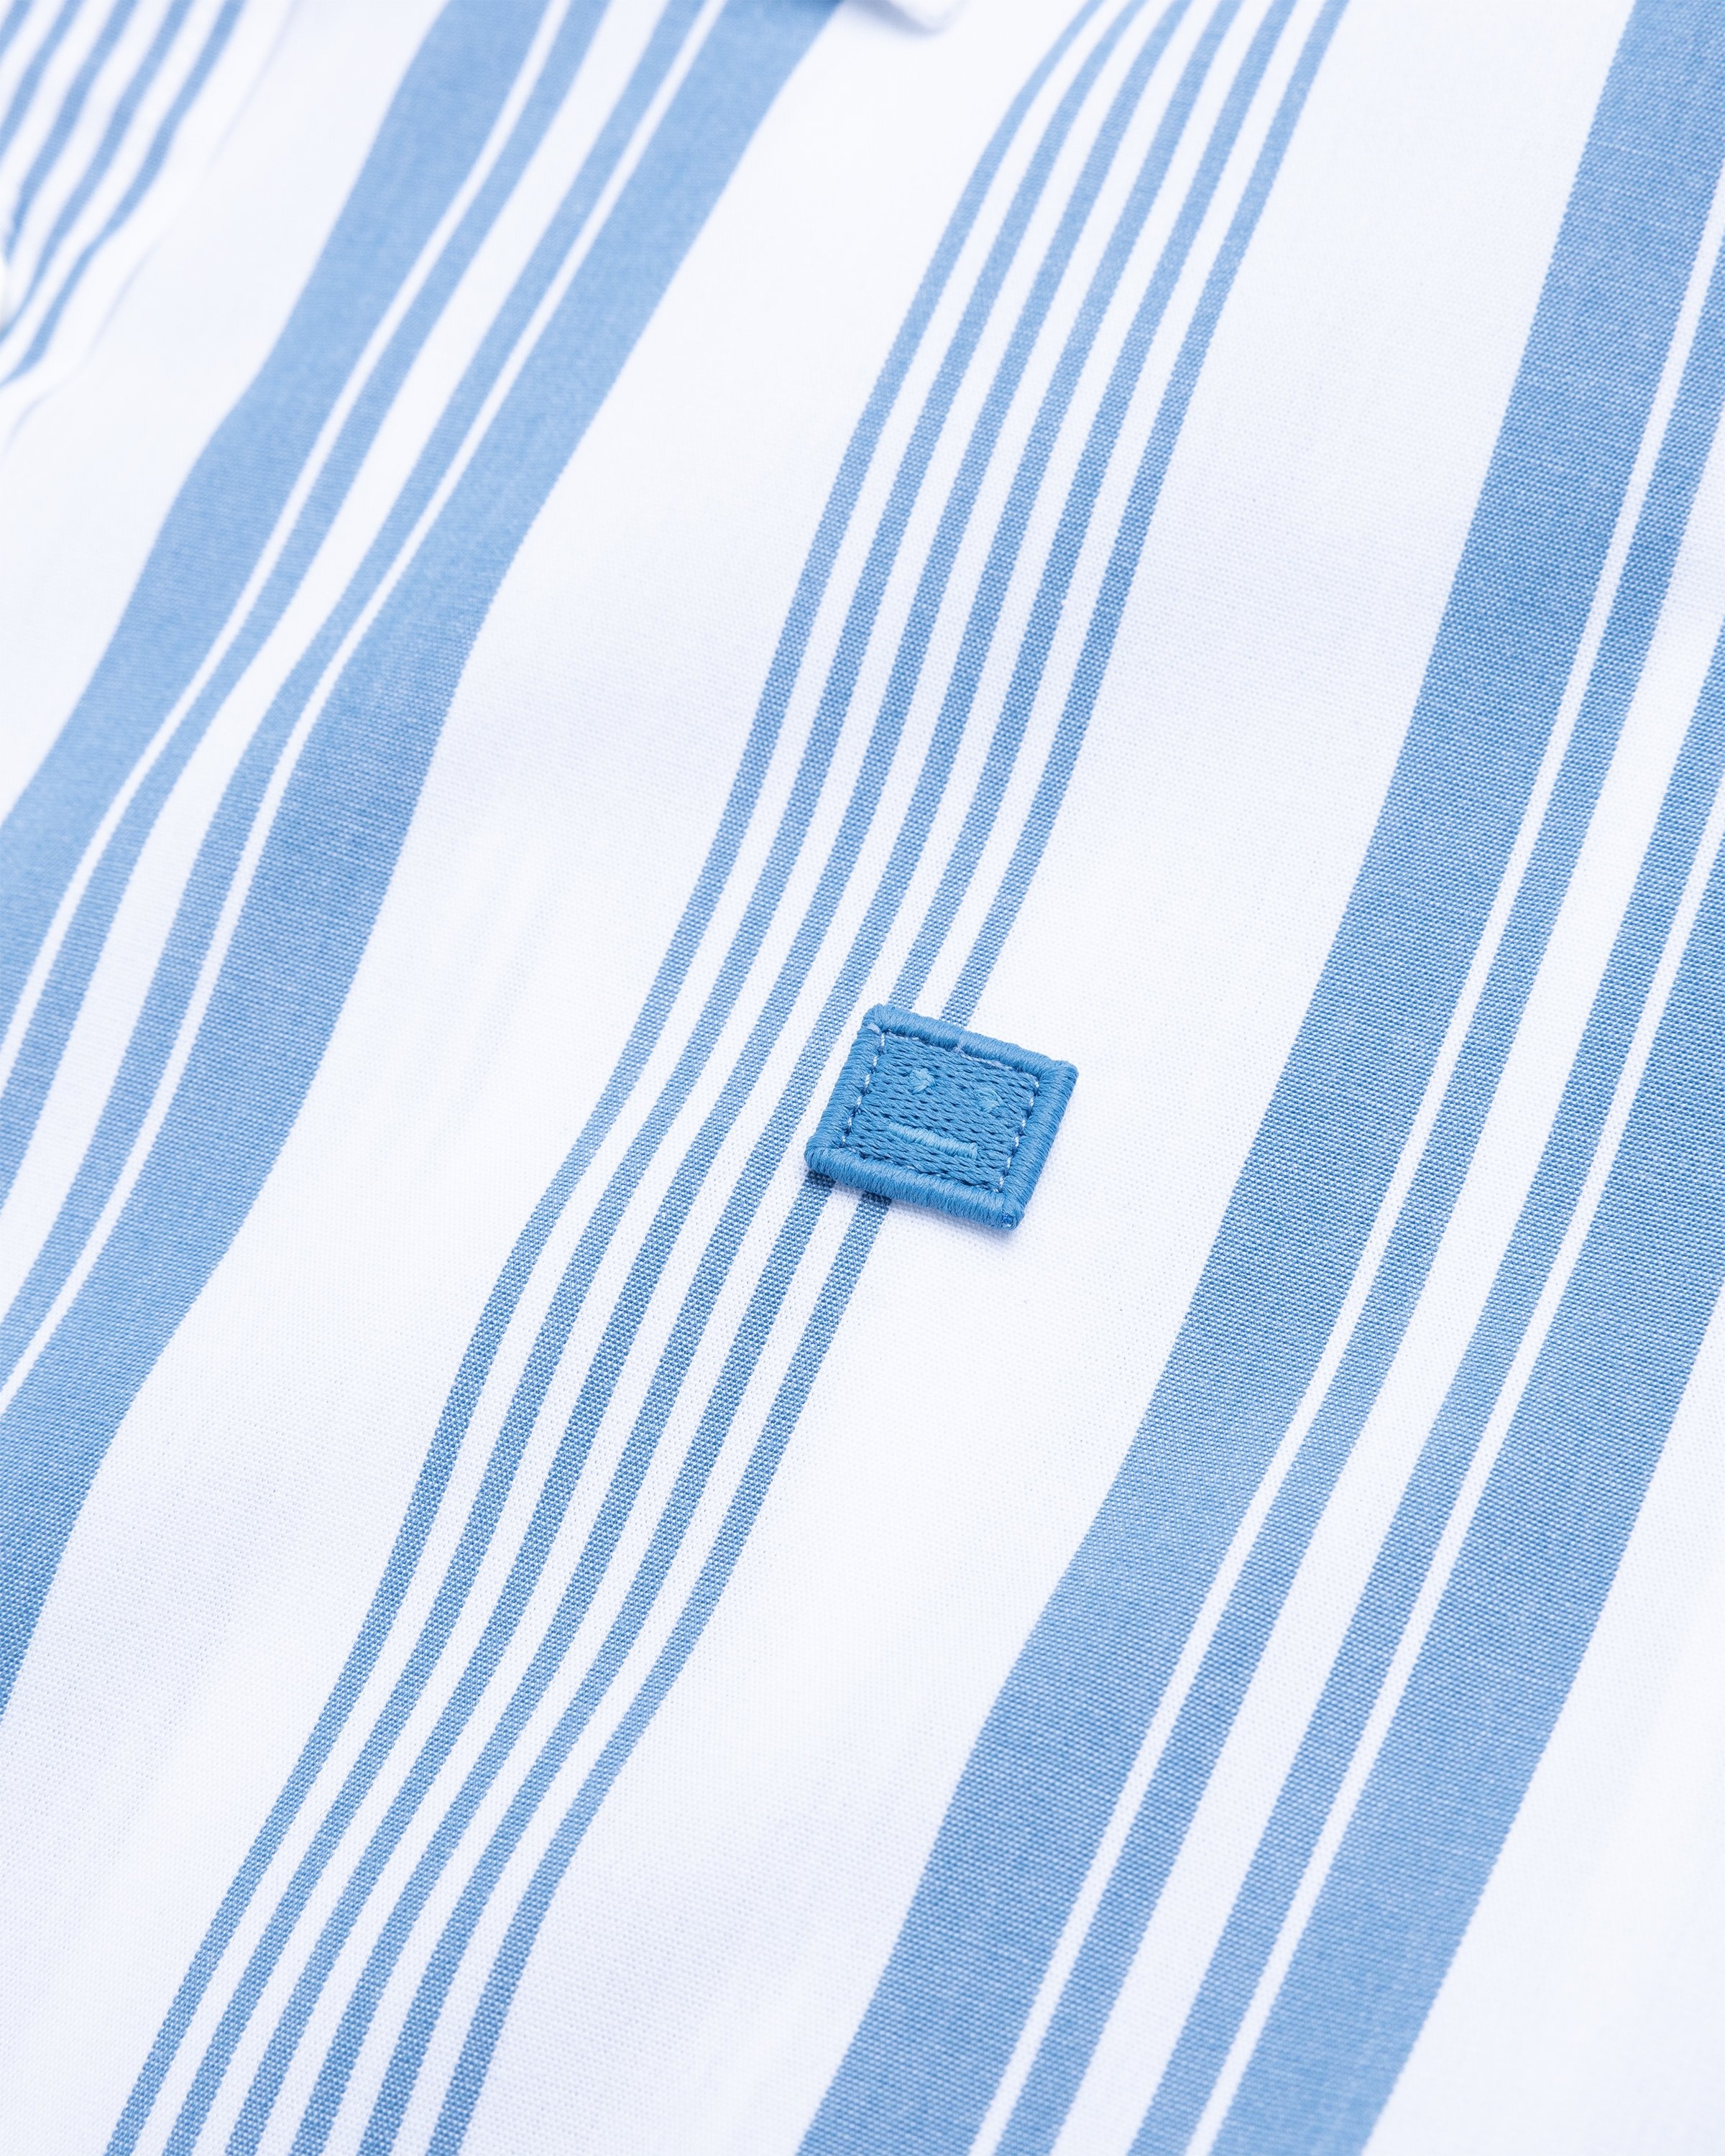 Acne Studios – Stripe Button-Up Shirt White/Steel Blue - Shirts - White - Image 6